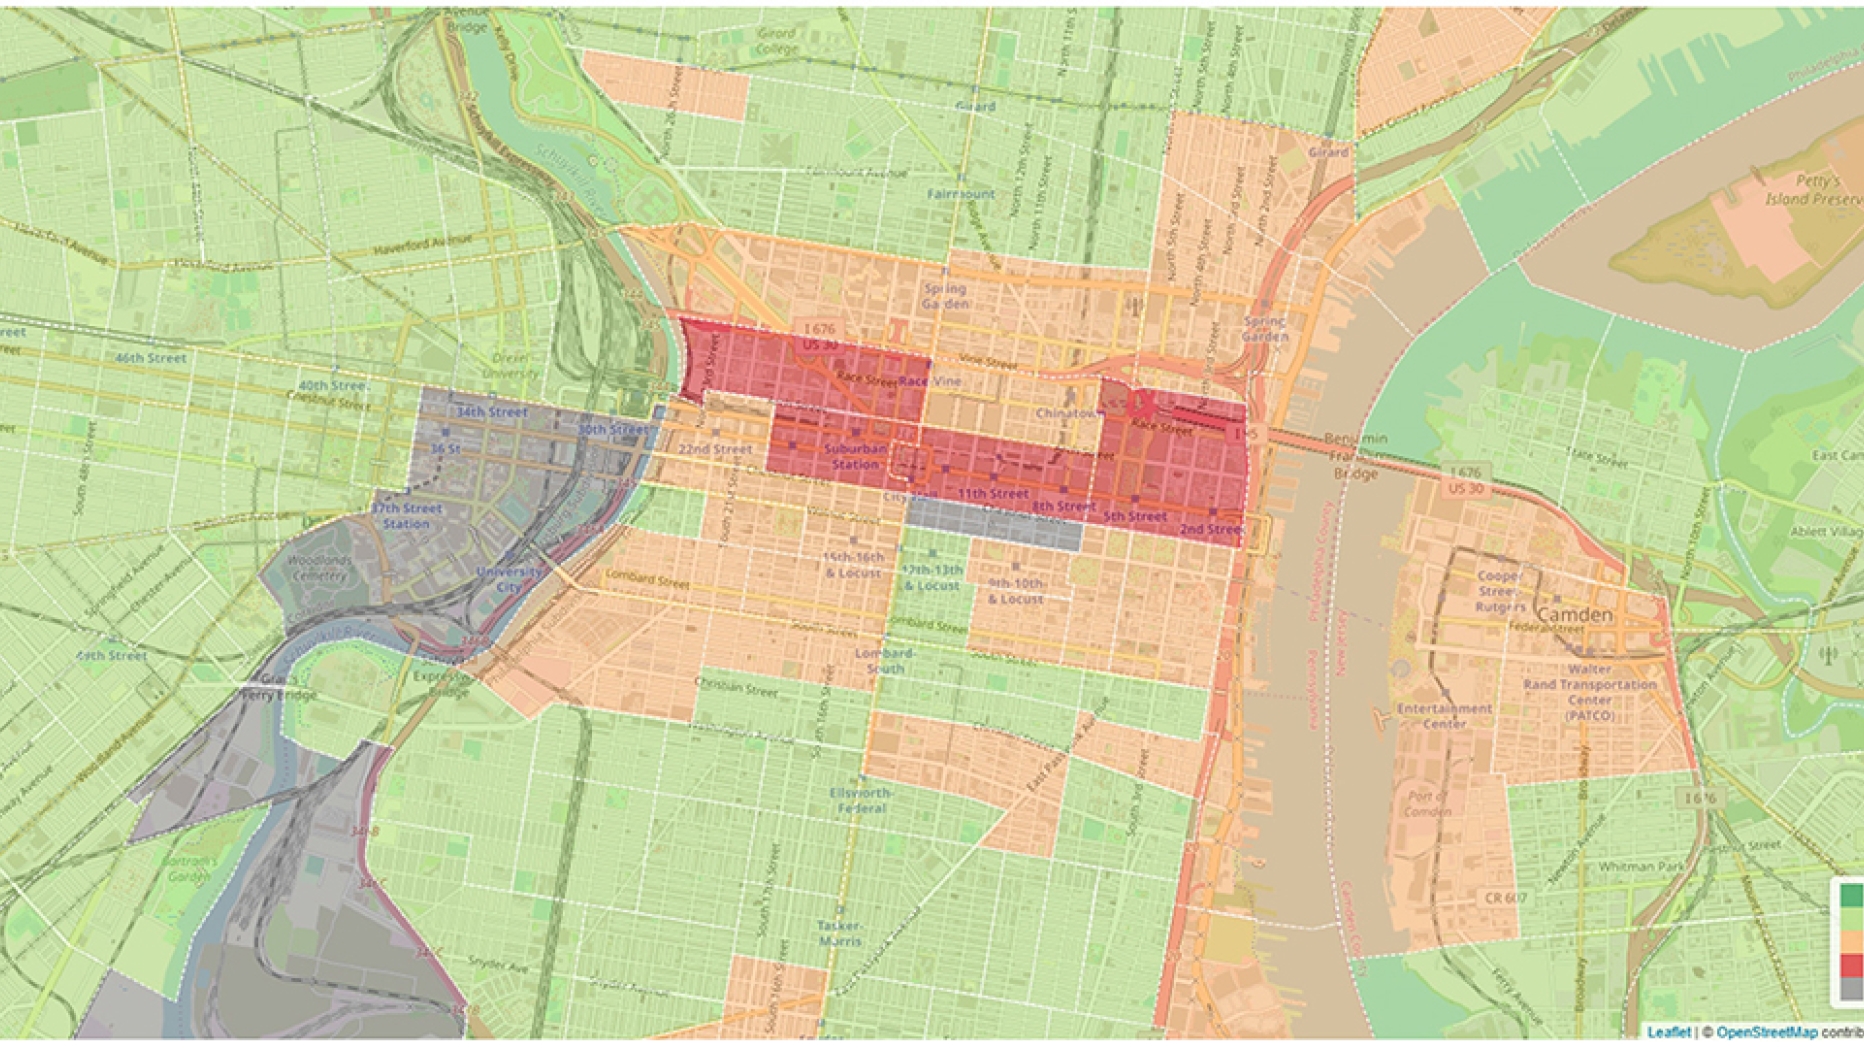 Map of Philadelphia with colored zones